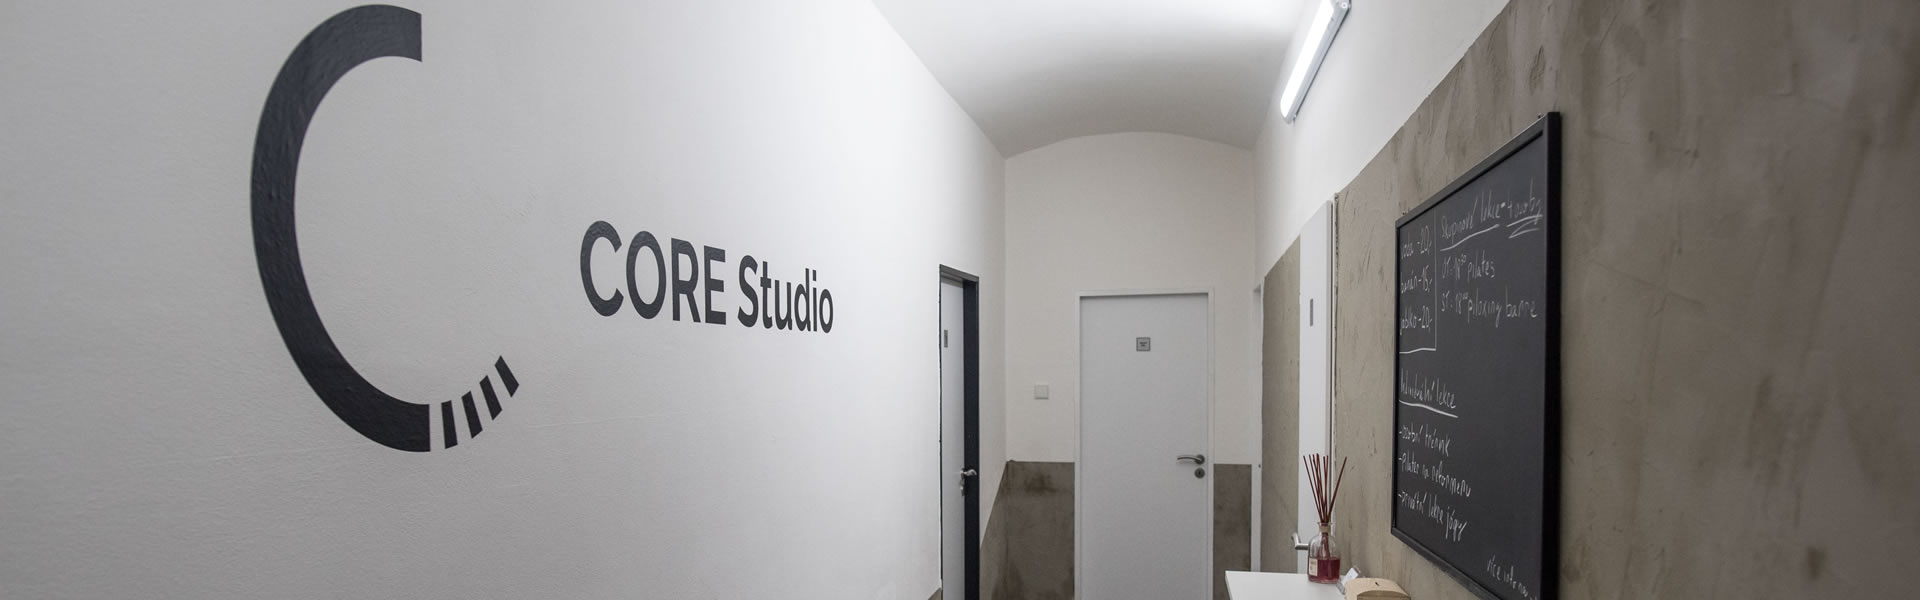 Core Studio - Ceník